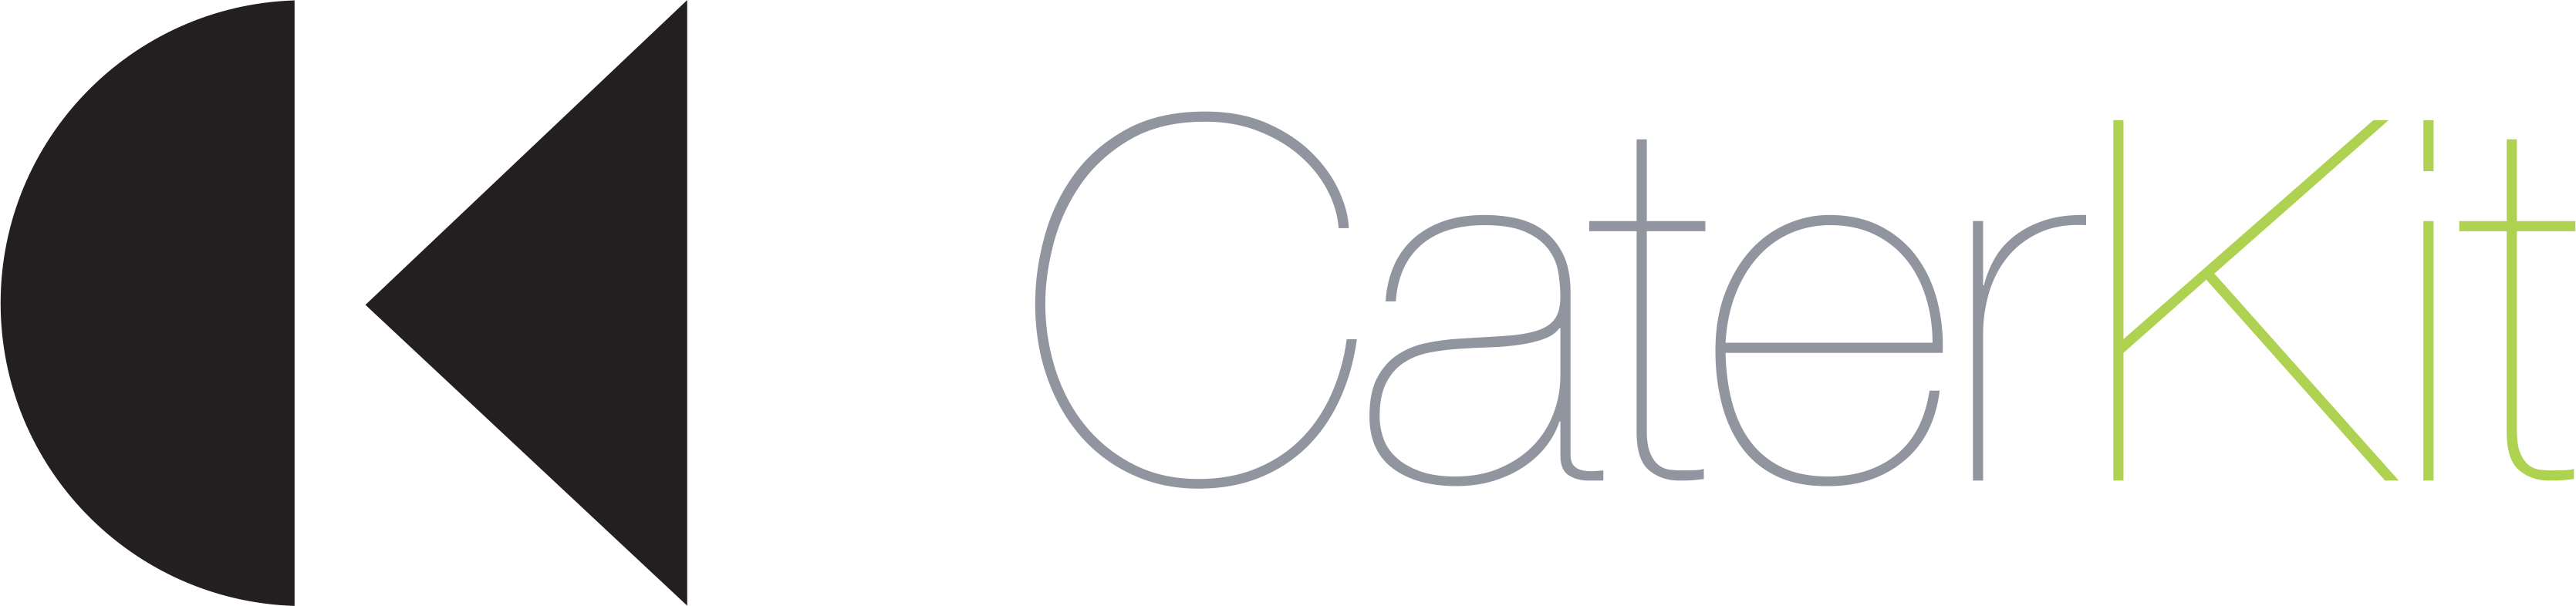 CaterKit Services Ltd